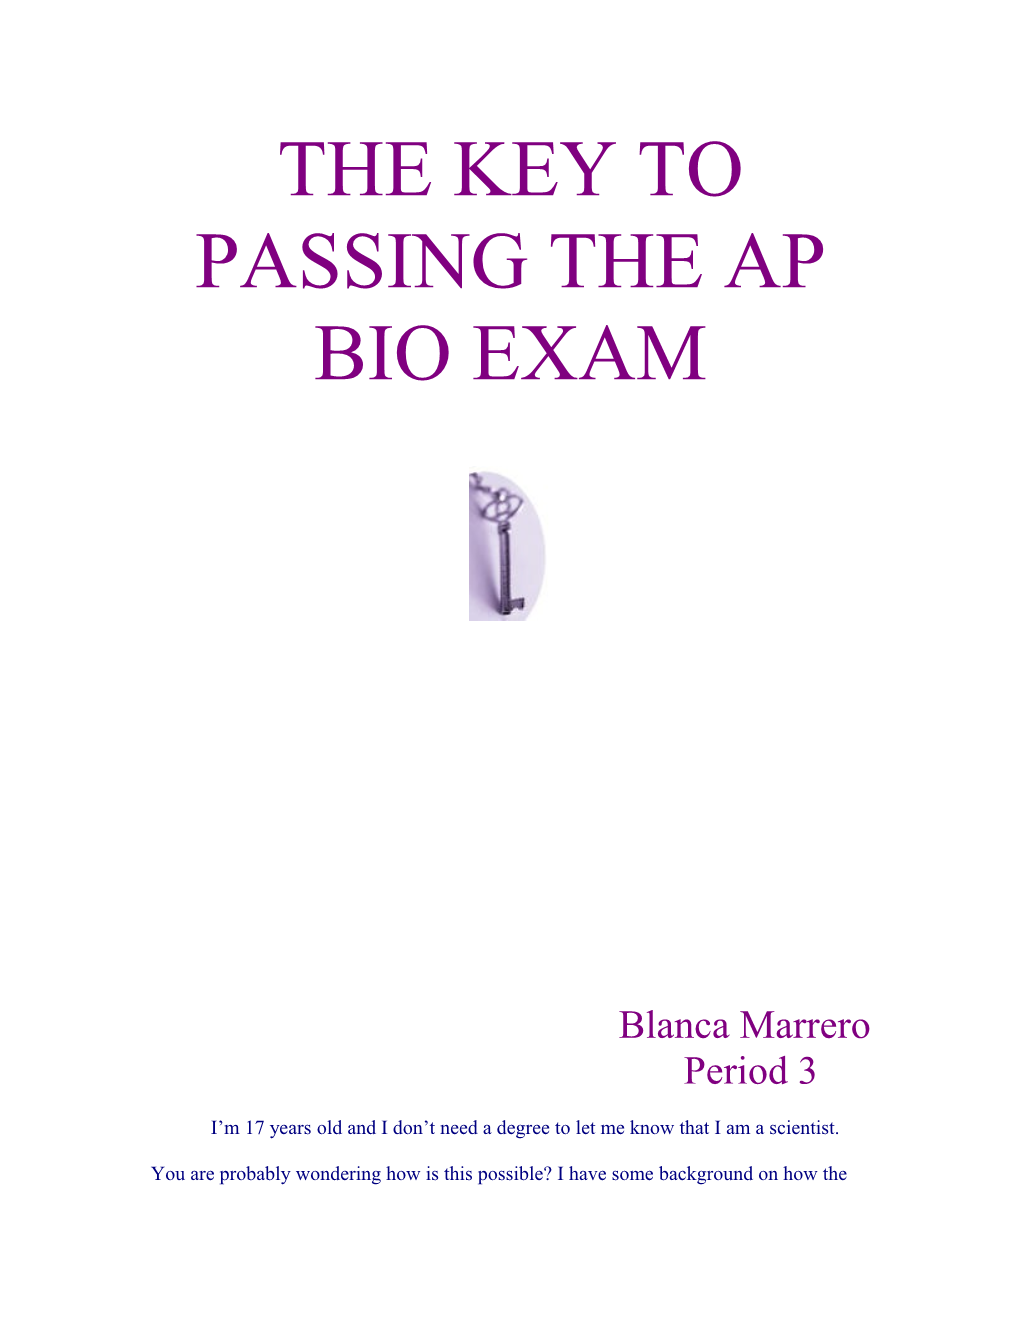 The Key to Passing the Ap Bio Exam